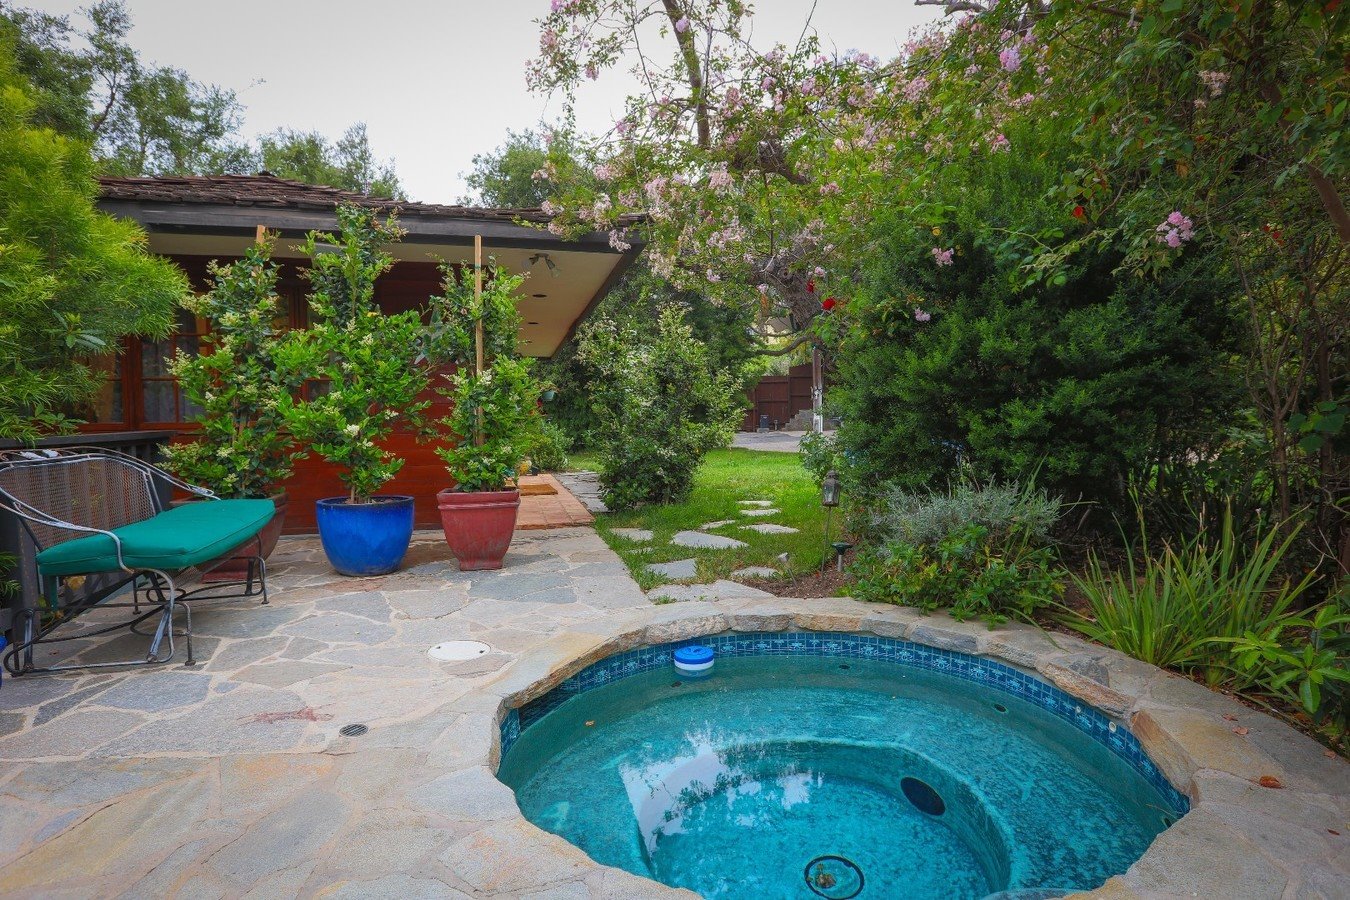 Casa del actor Bradley Cooper piscina redonda